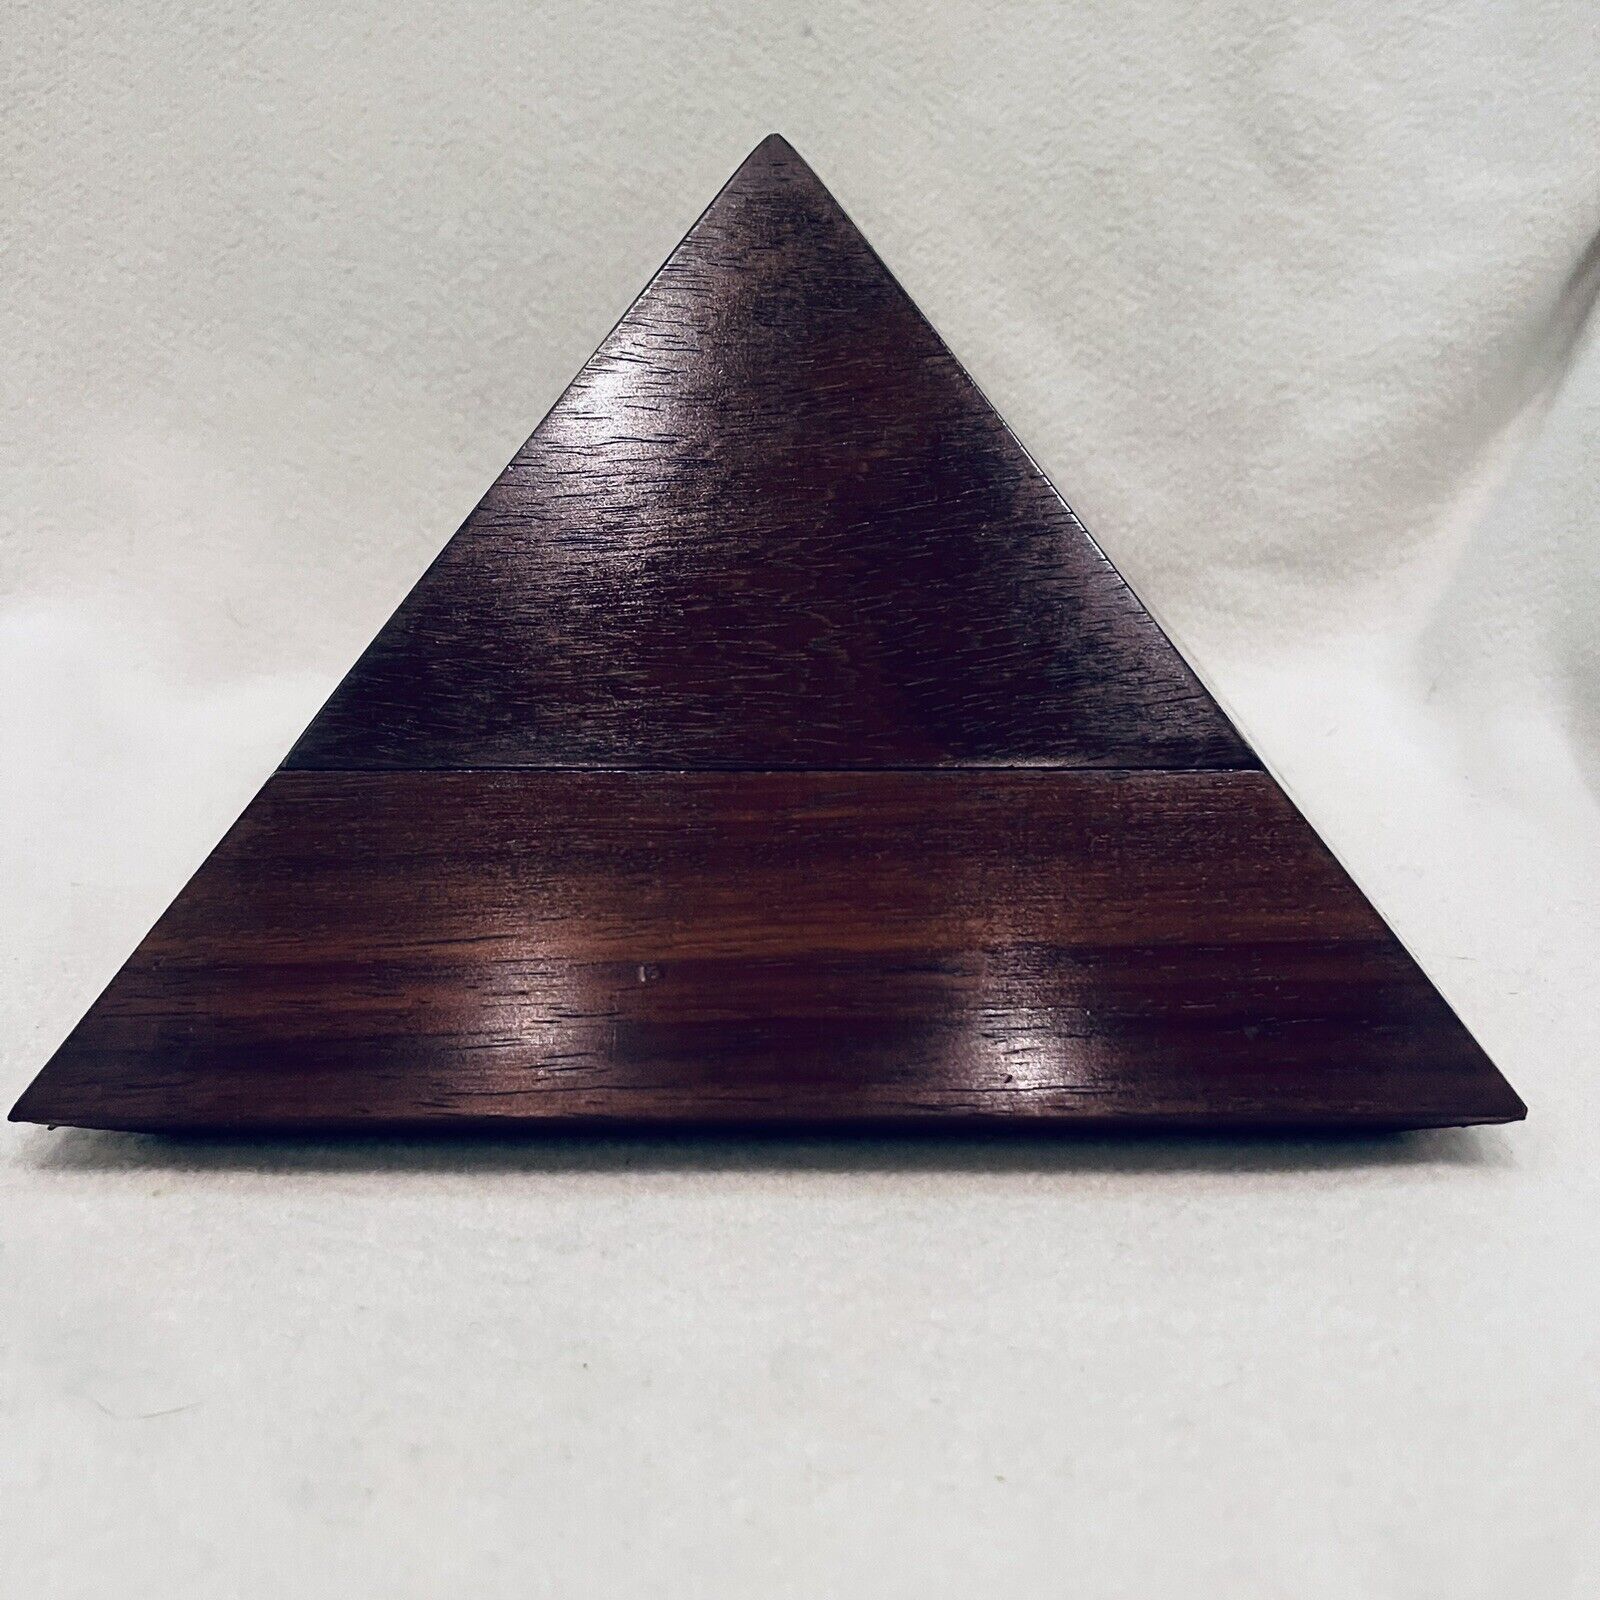 Vintage Large Wooden Pyramid Jewelry/ Trinket Box